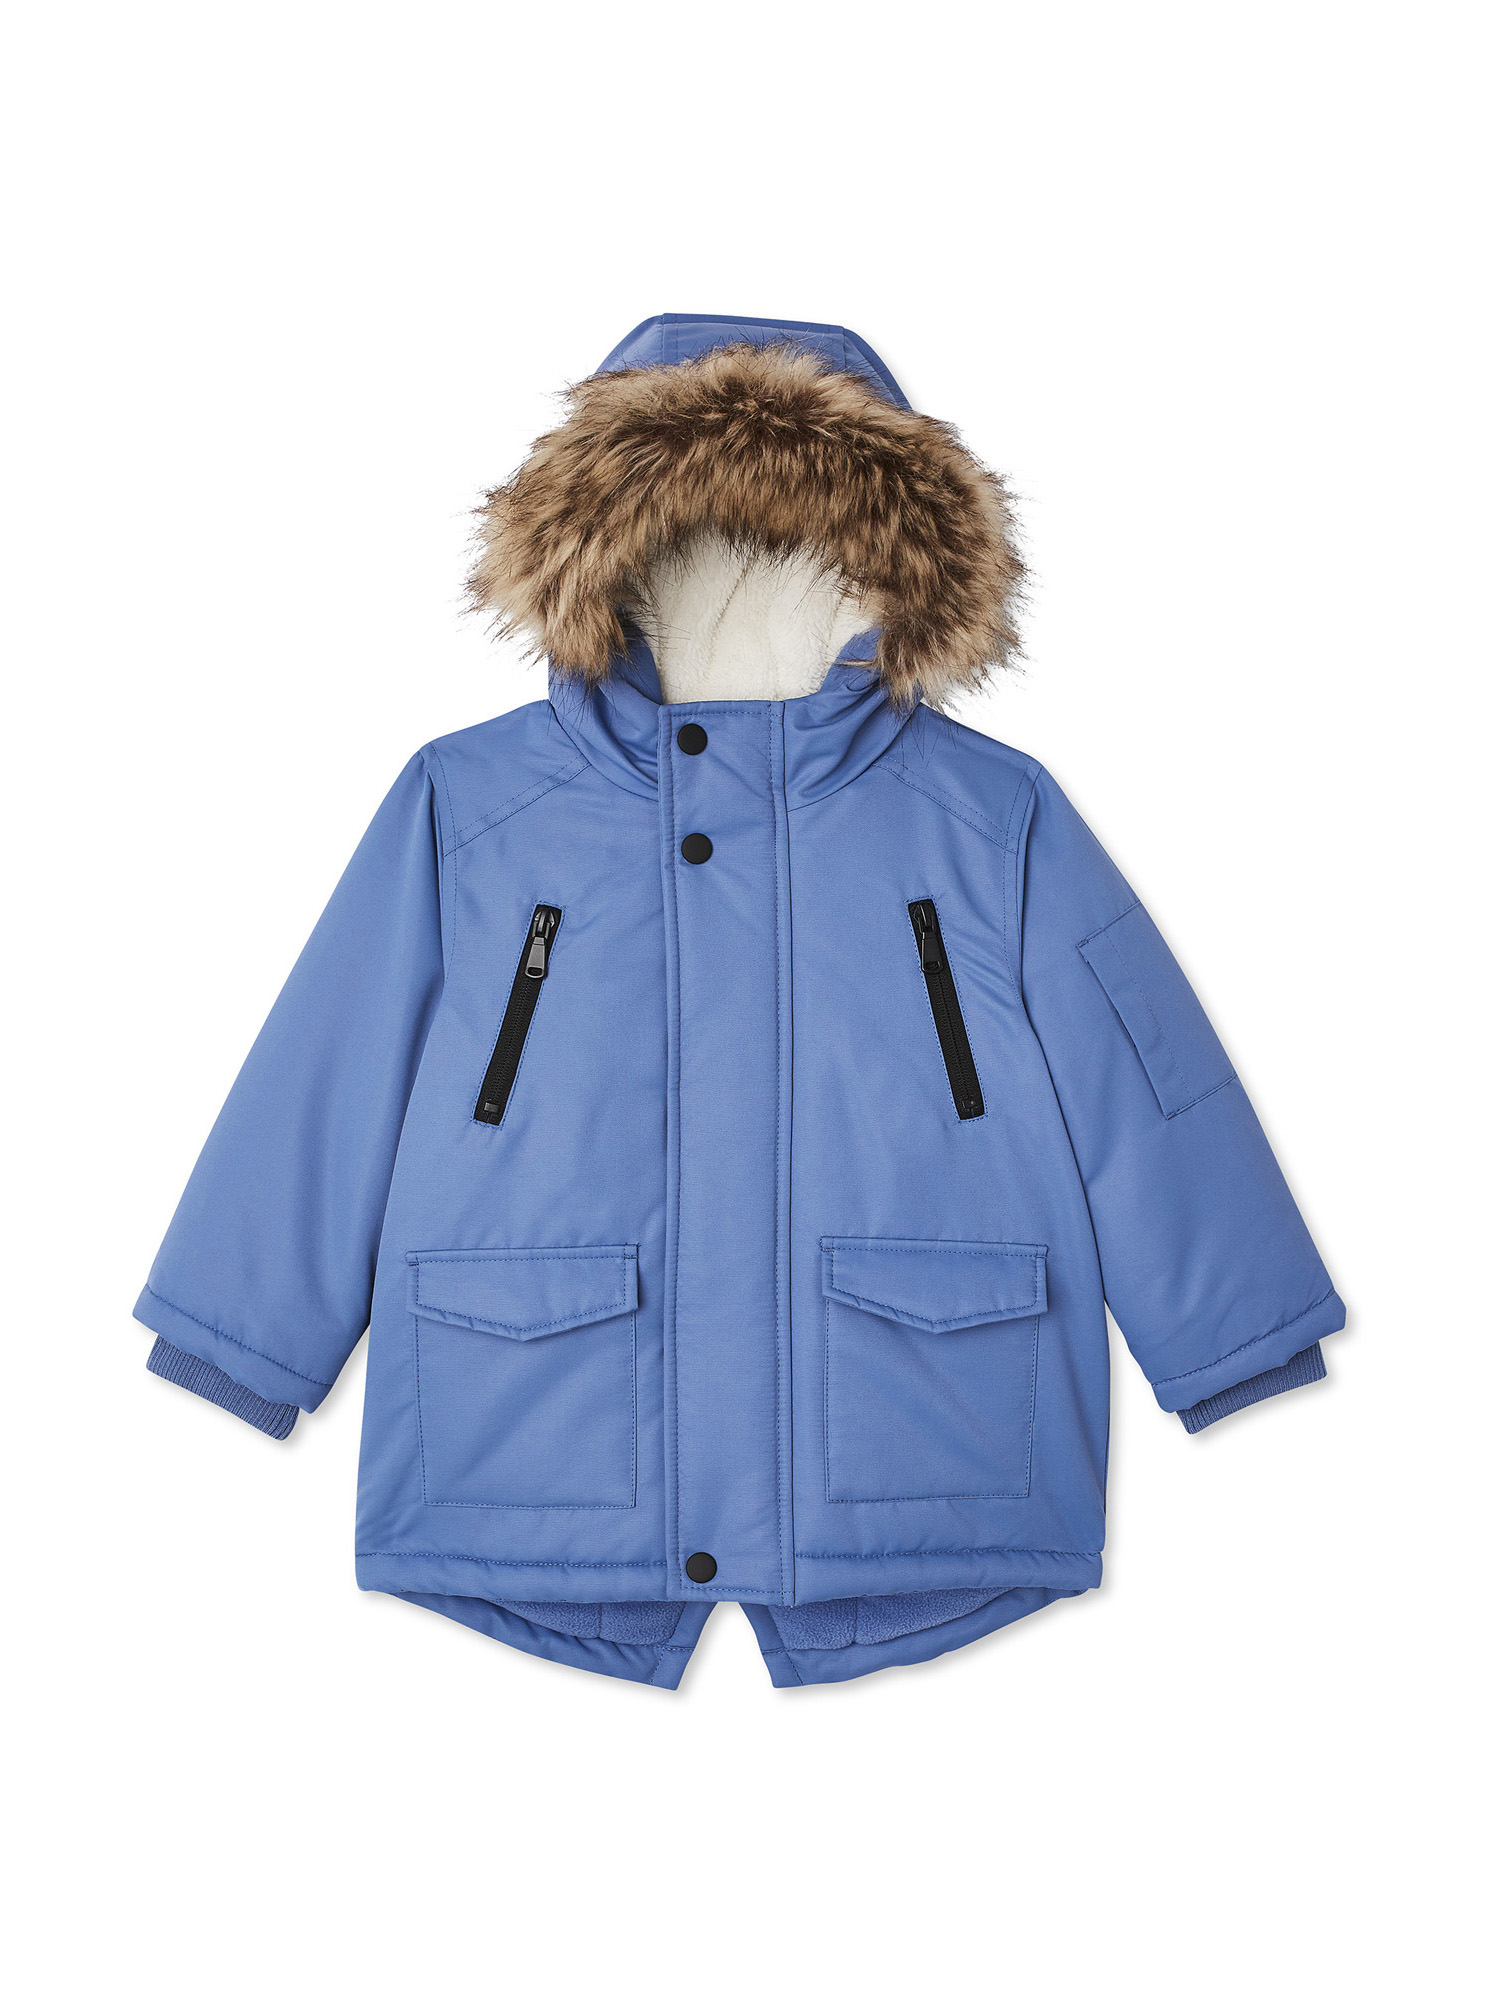 George Toddler Boy Faux Fur Hooded Parka Winter Jacket Coat - image 1 of 2